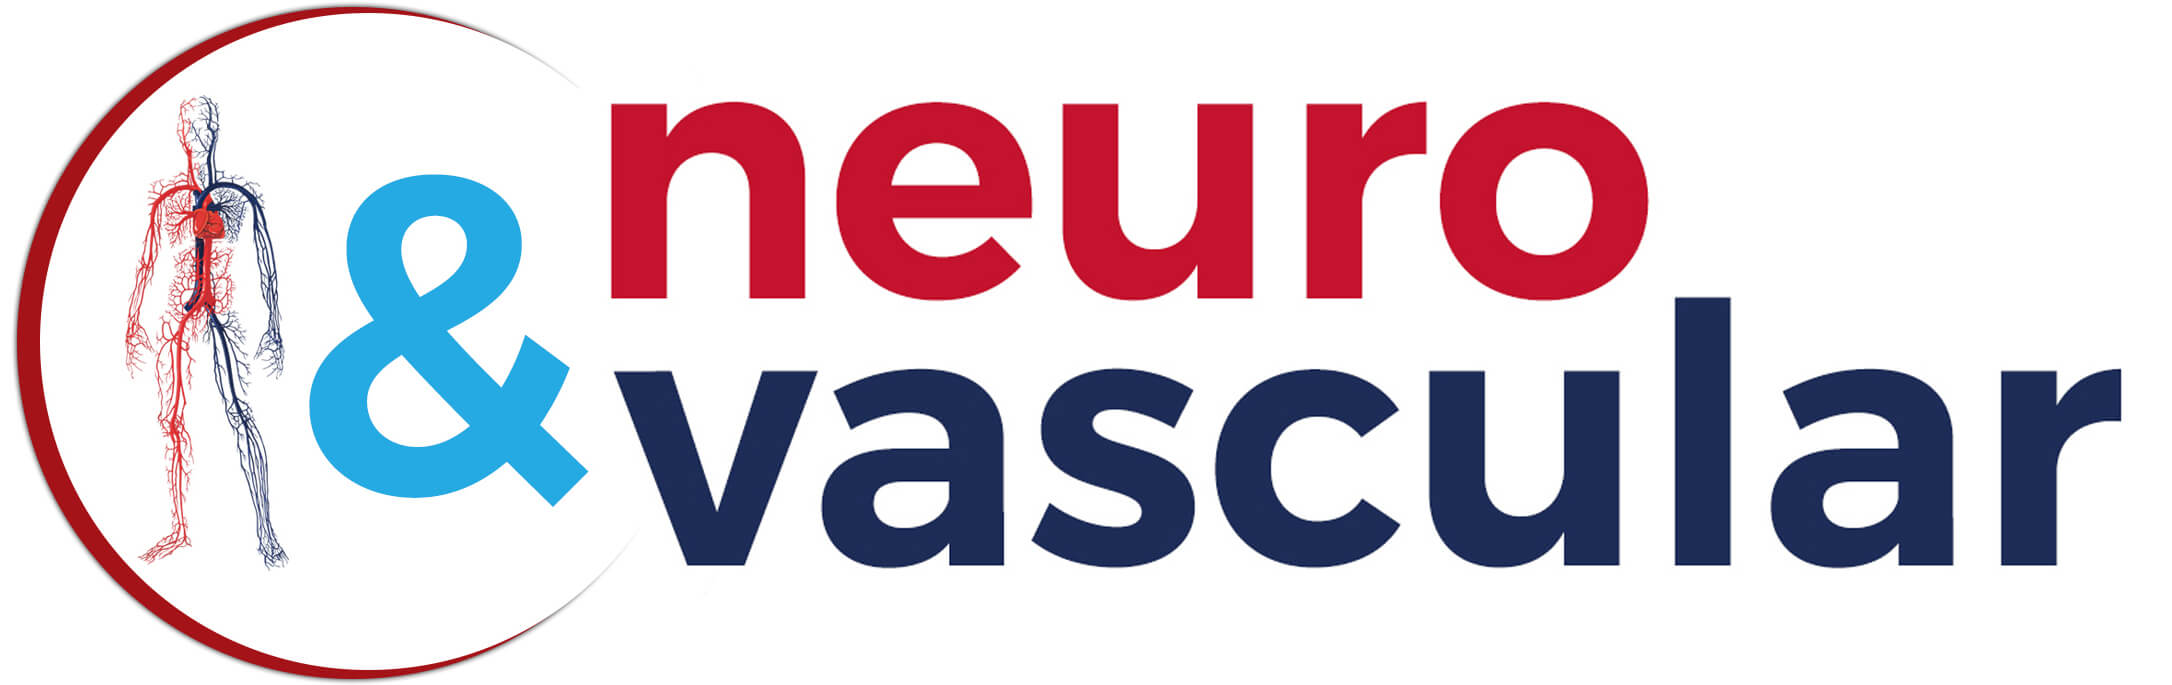 Neuroandvasular logo